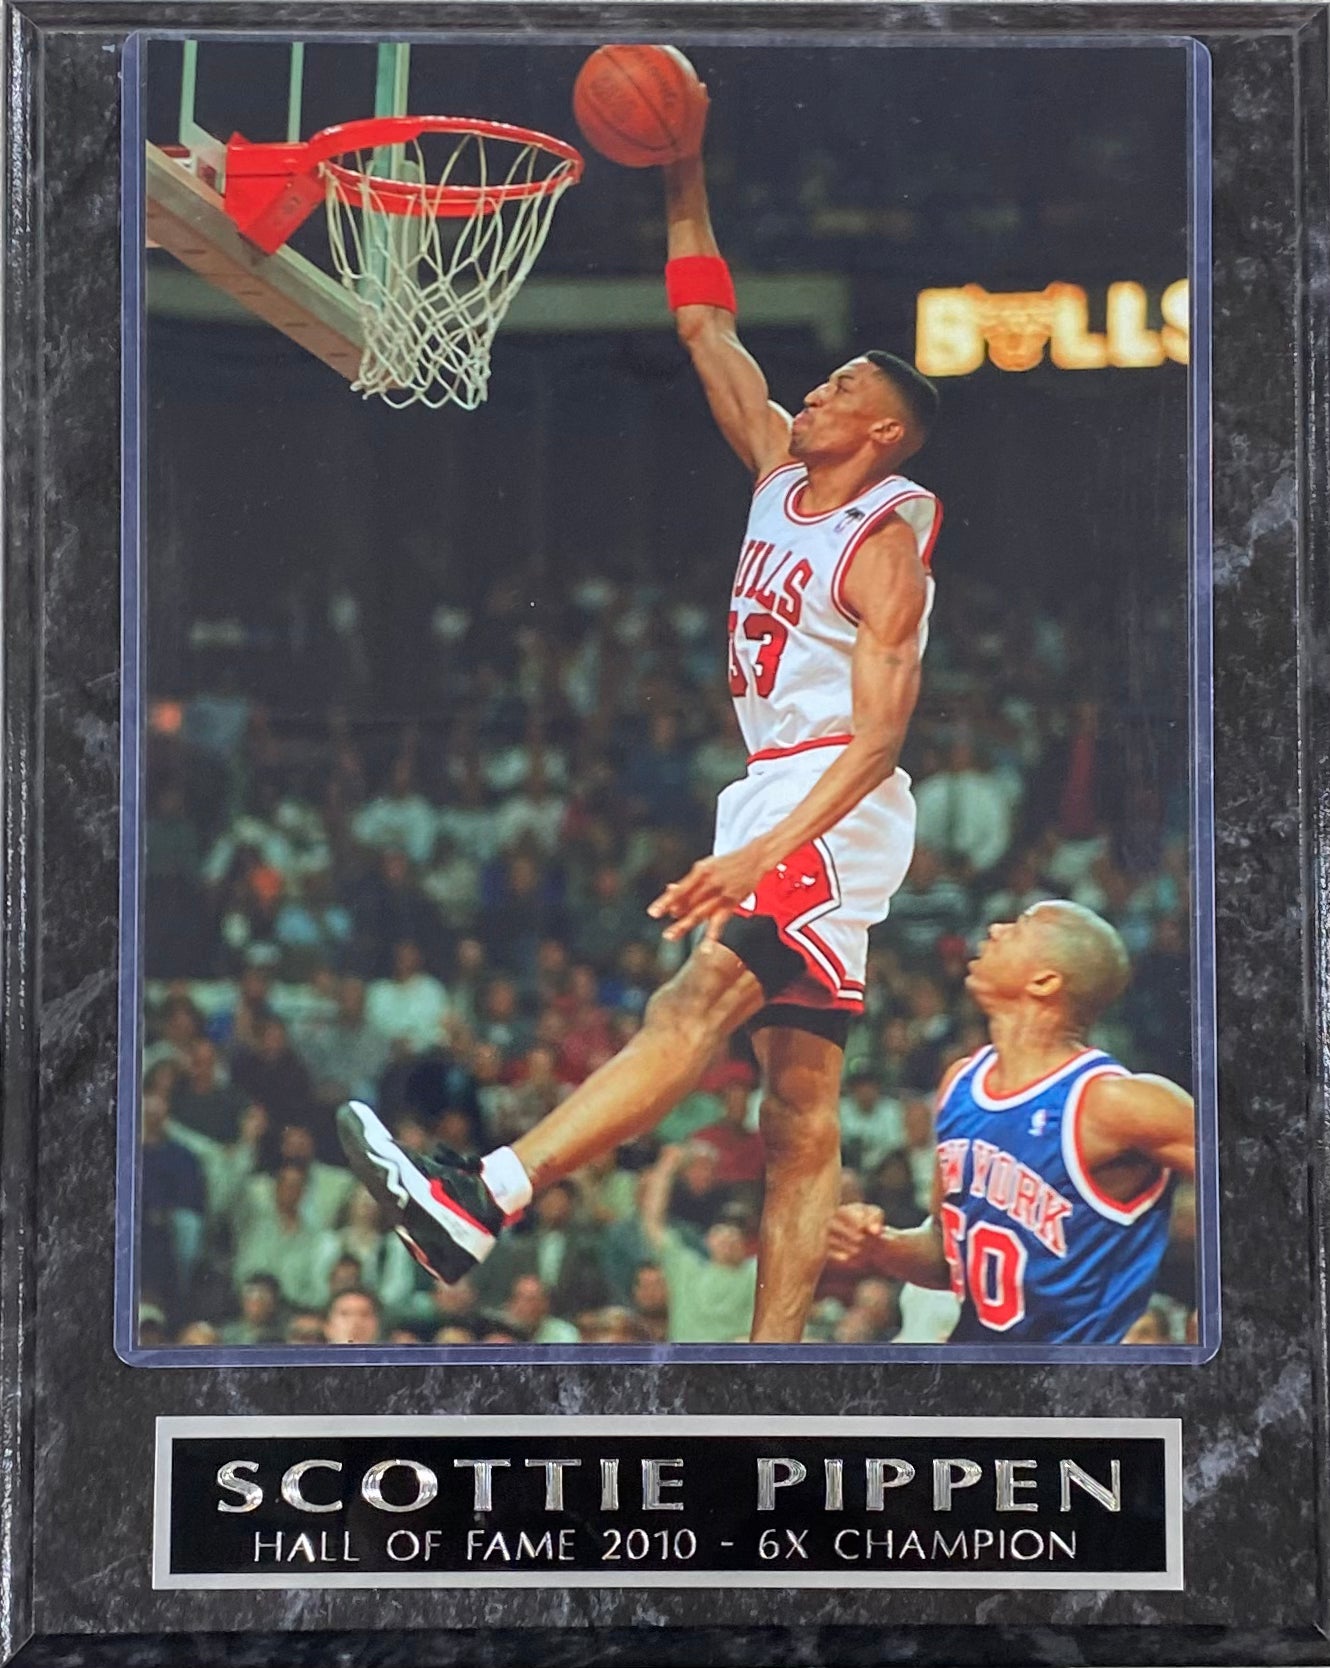 Scottie Pippen Chicago Bulls Hall of Fame 2010 6x Champion